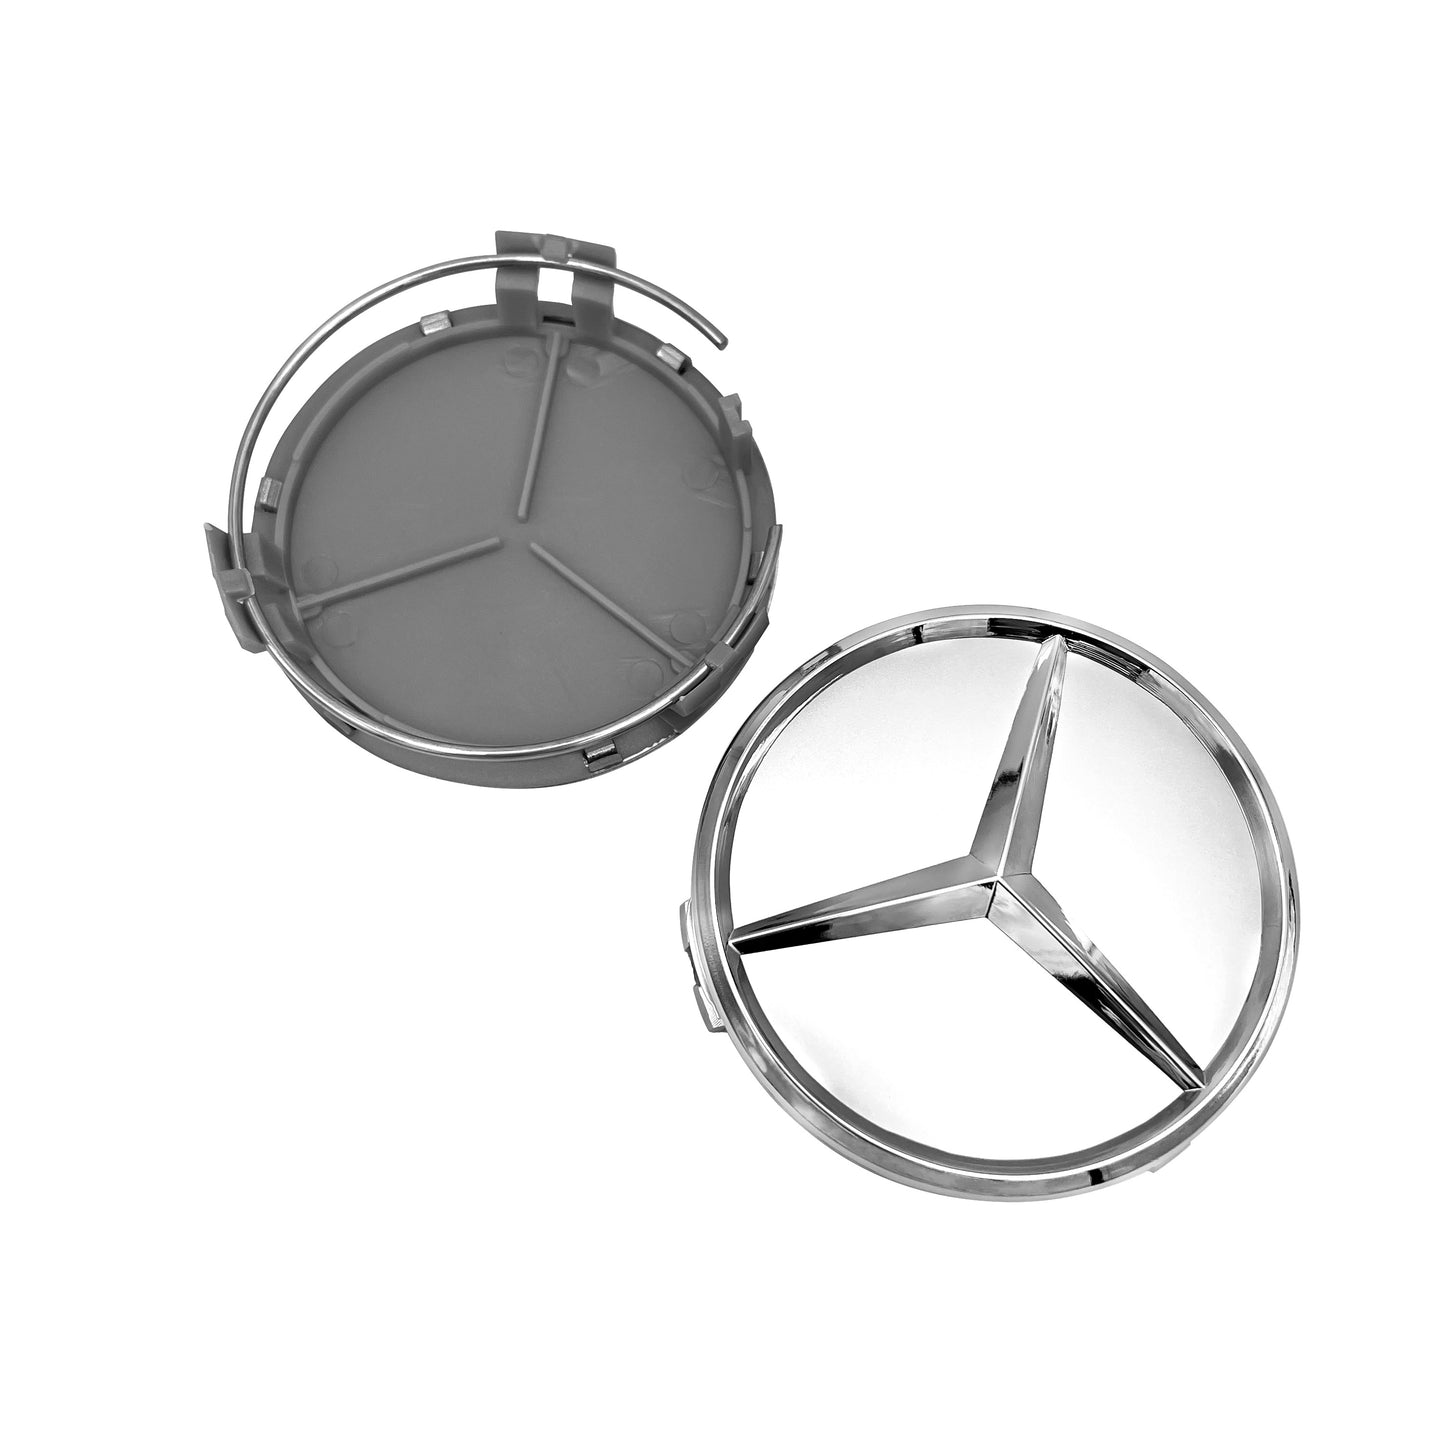 Mercedes Benz AMG Silver Chrome Wheel Center Hub Caps Emblem 4PC Set Wreath 75mm